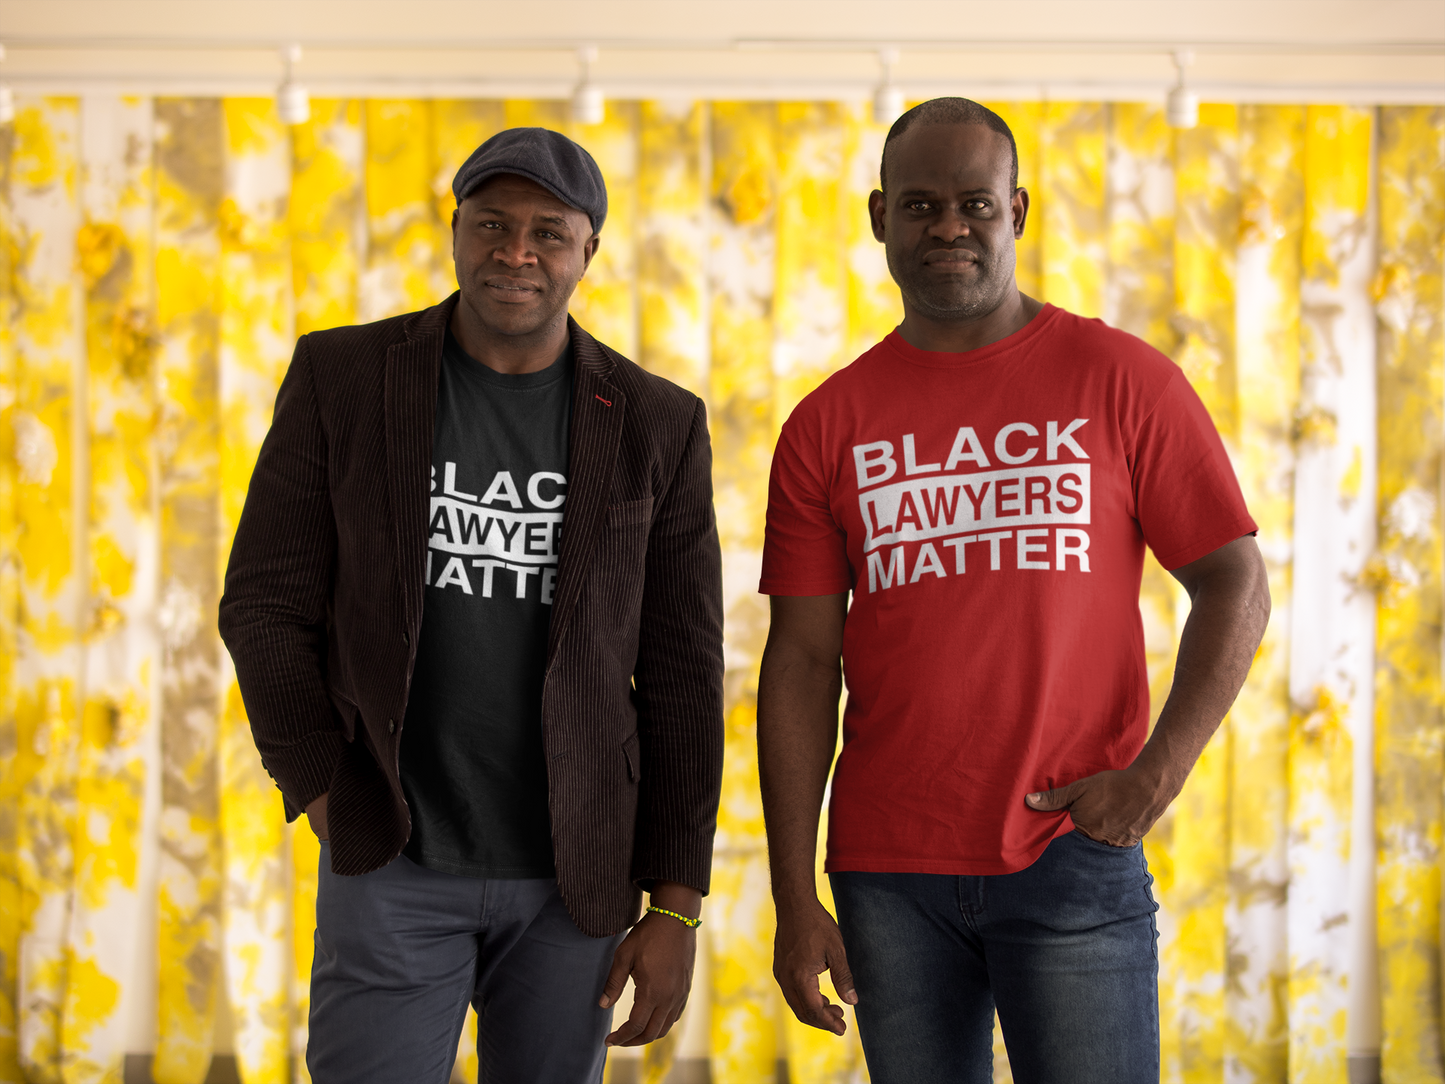 BLM - Black Lawyers Matter T-Shirt